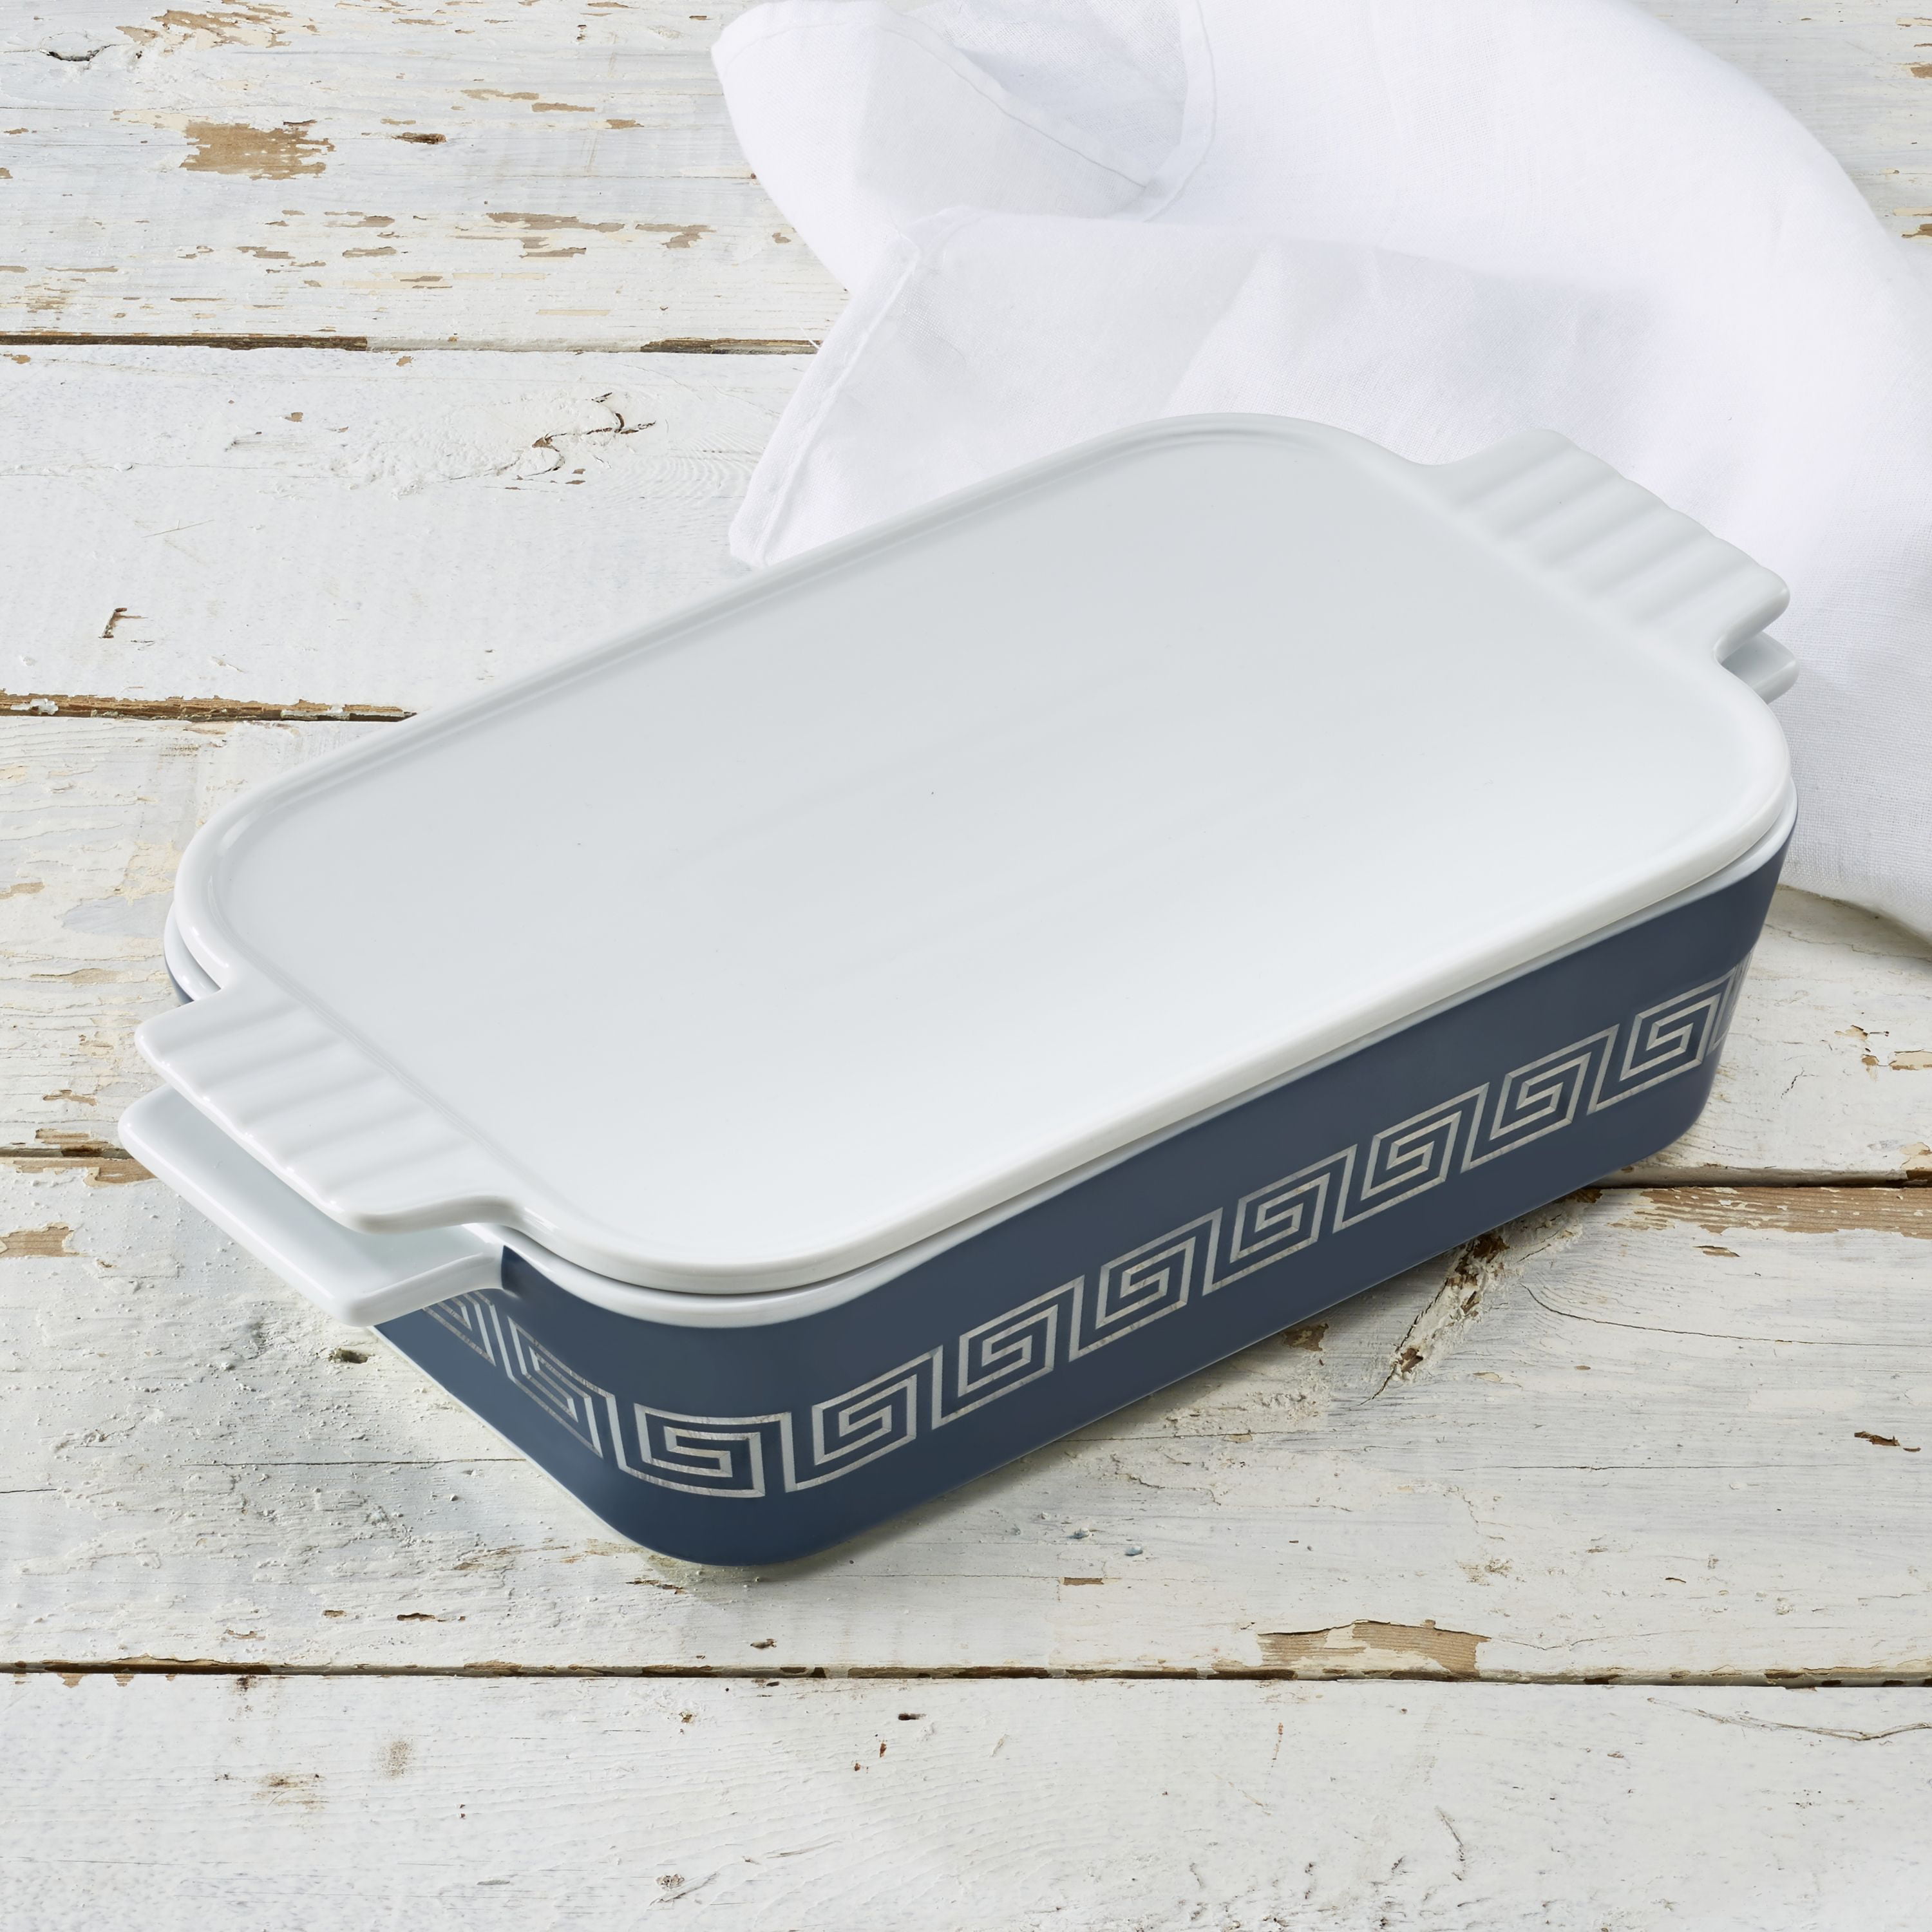 Wilmax WL-997015/A 21 oz White Porcelain Baking Pot with Lid, Pair